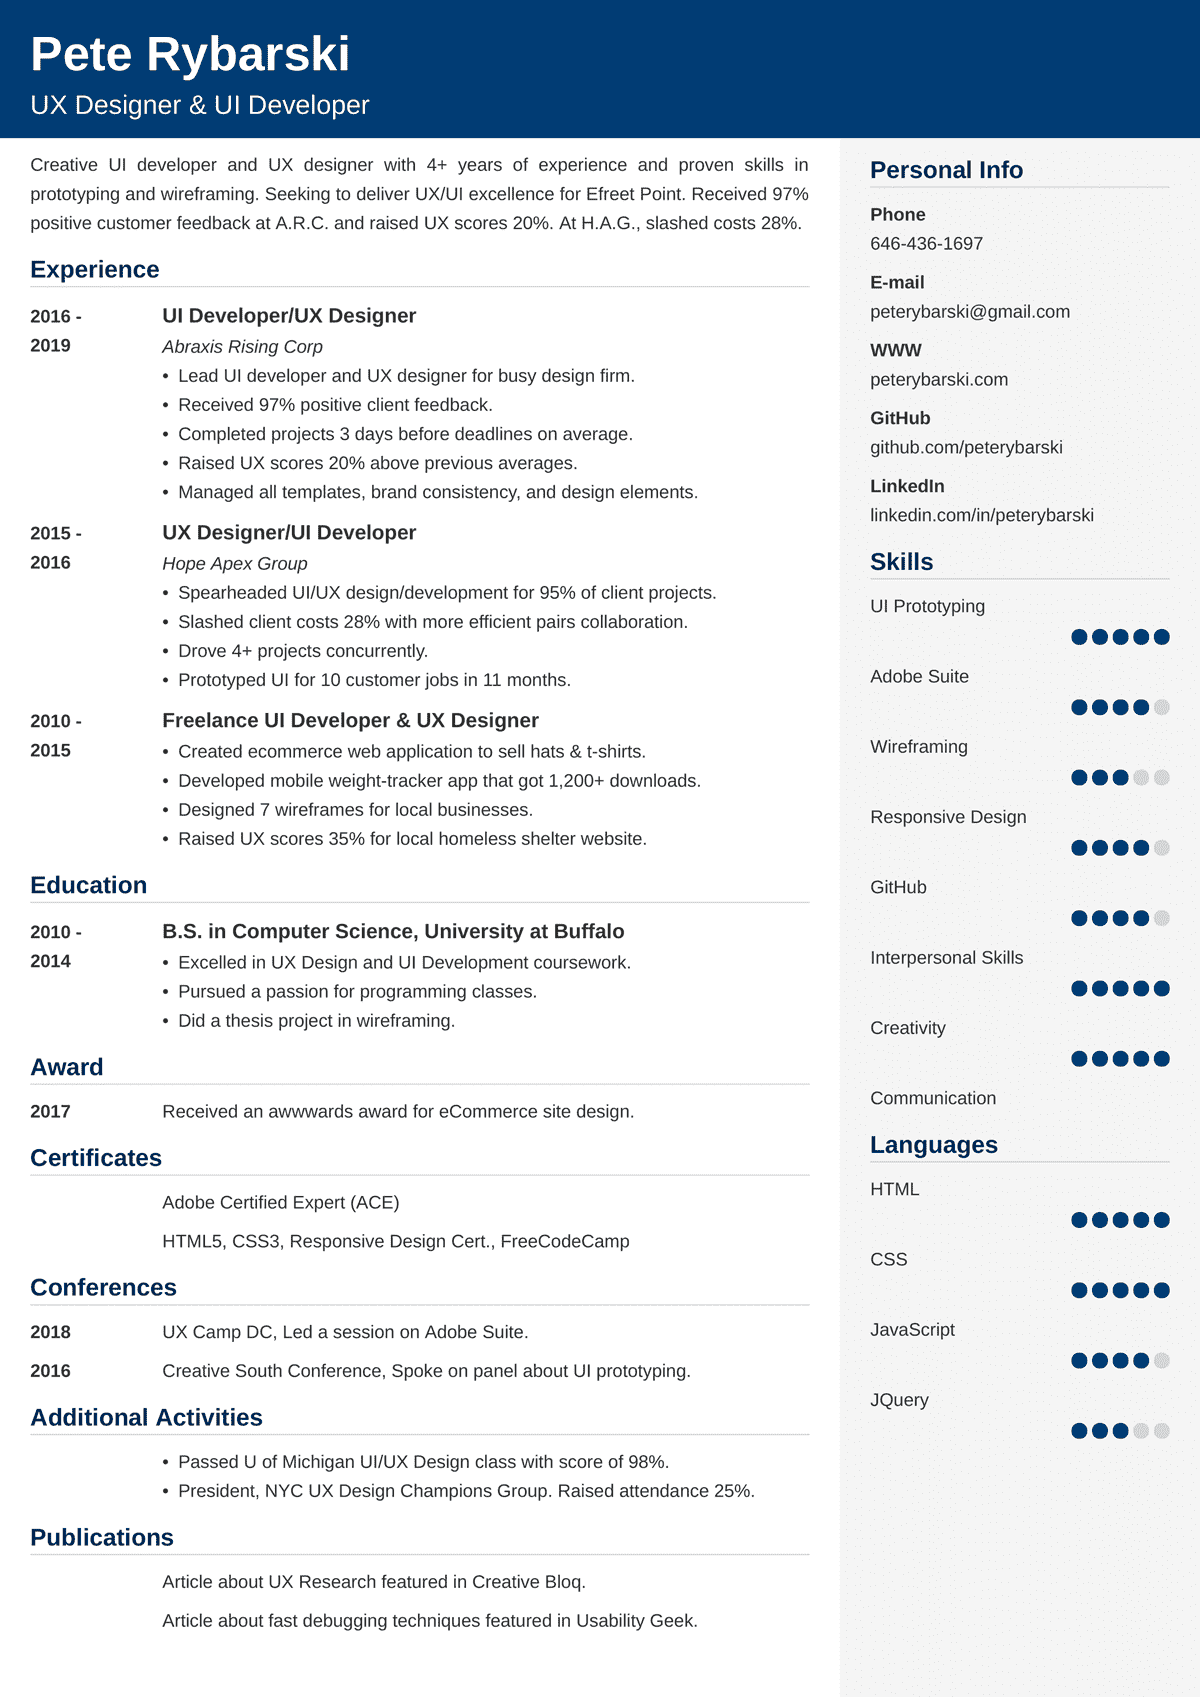 ux designer resume  u0026 ui developer resume u201425  tips   examples